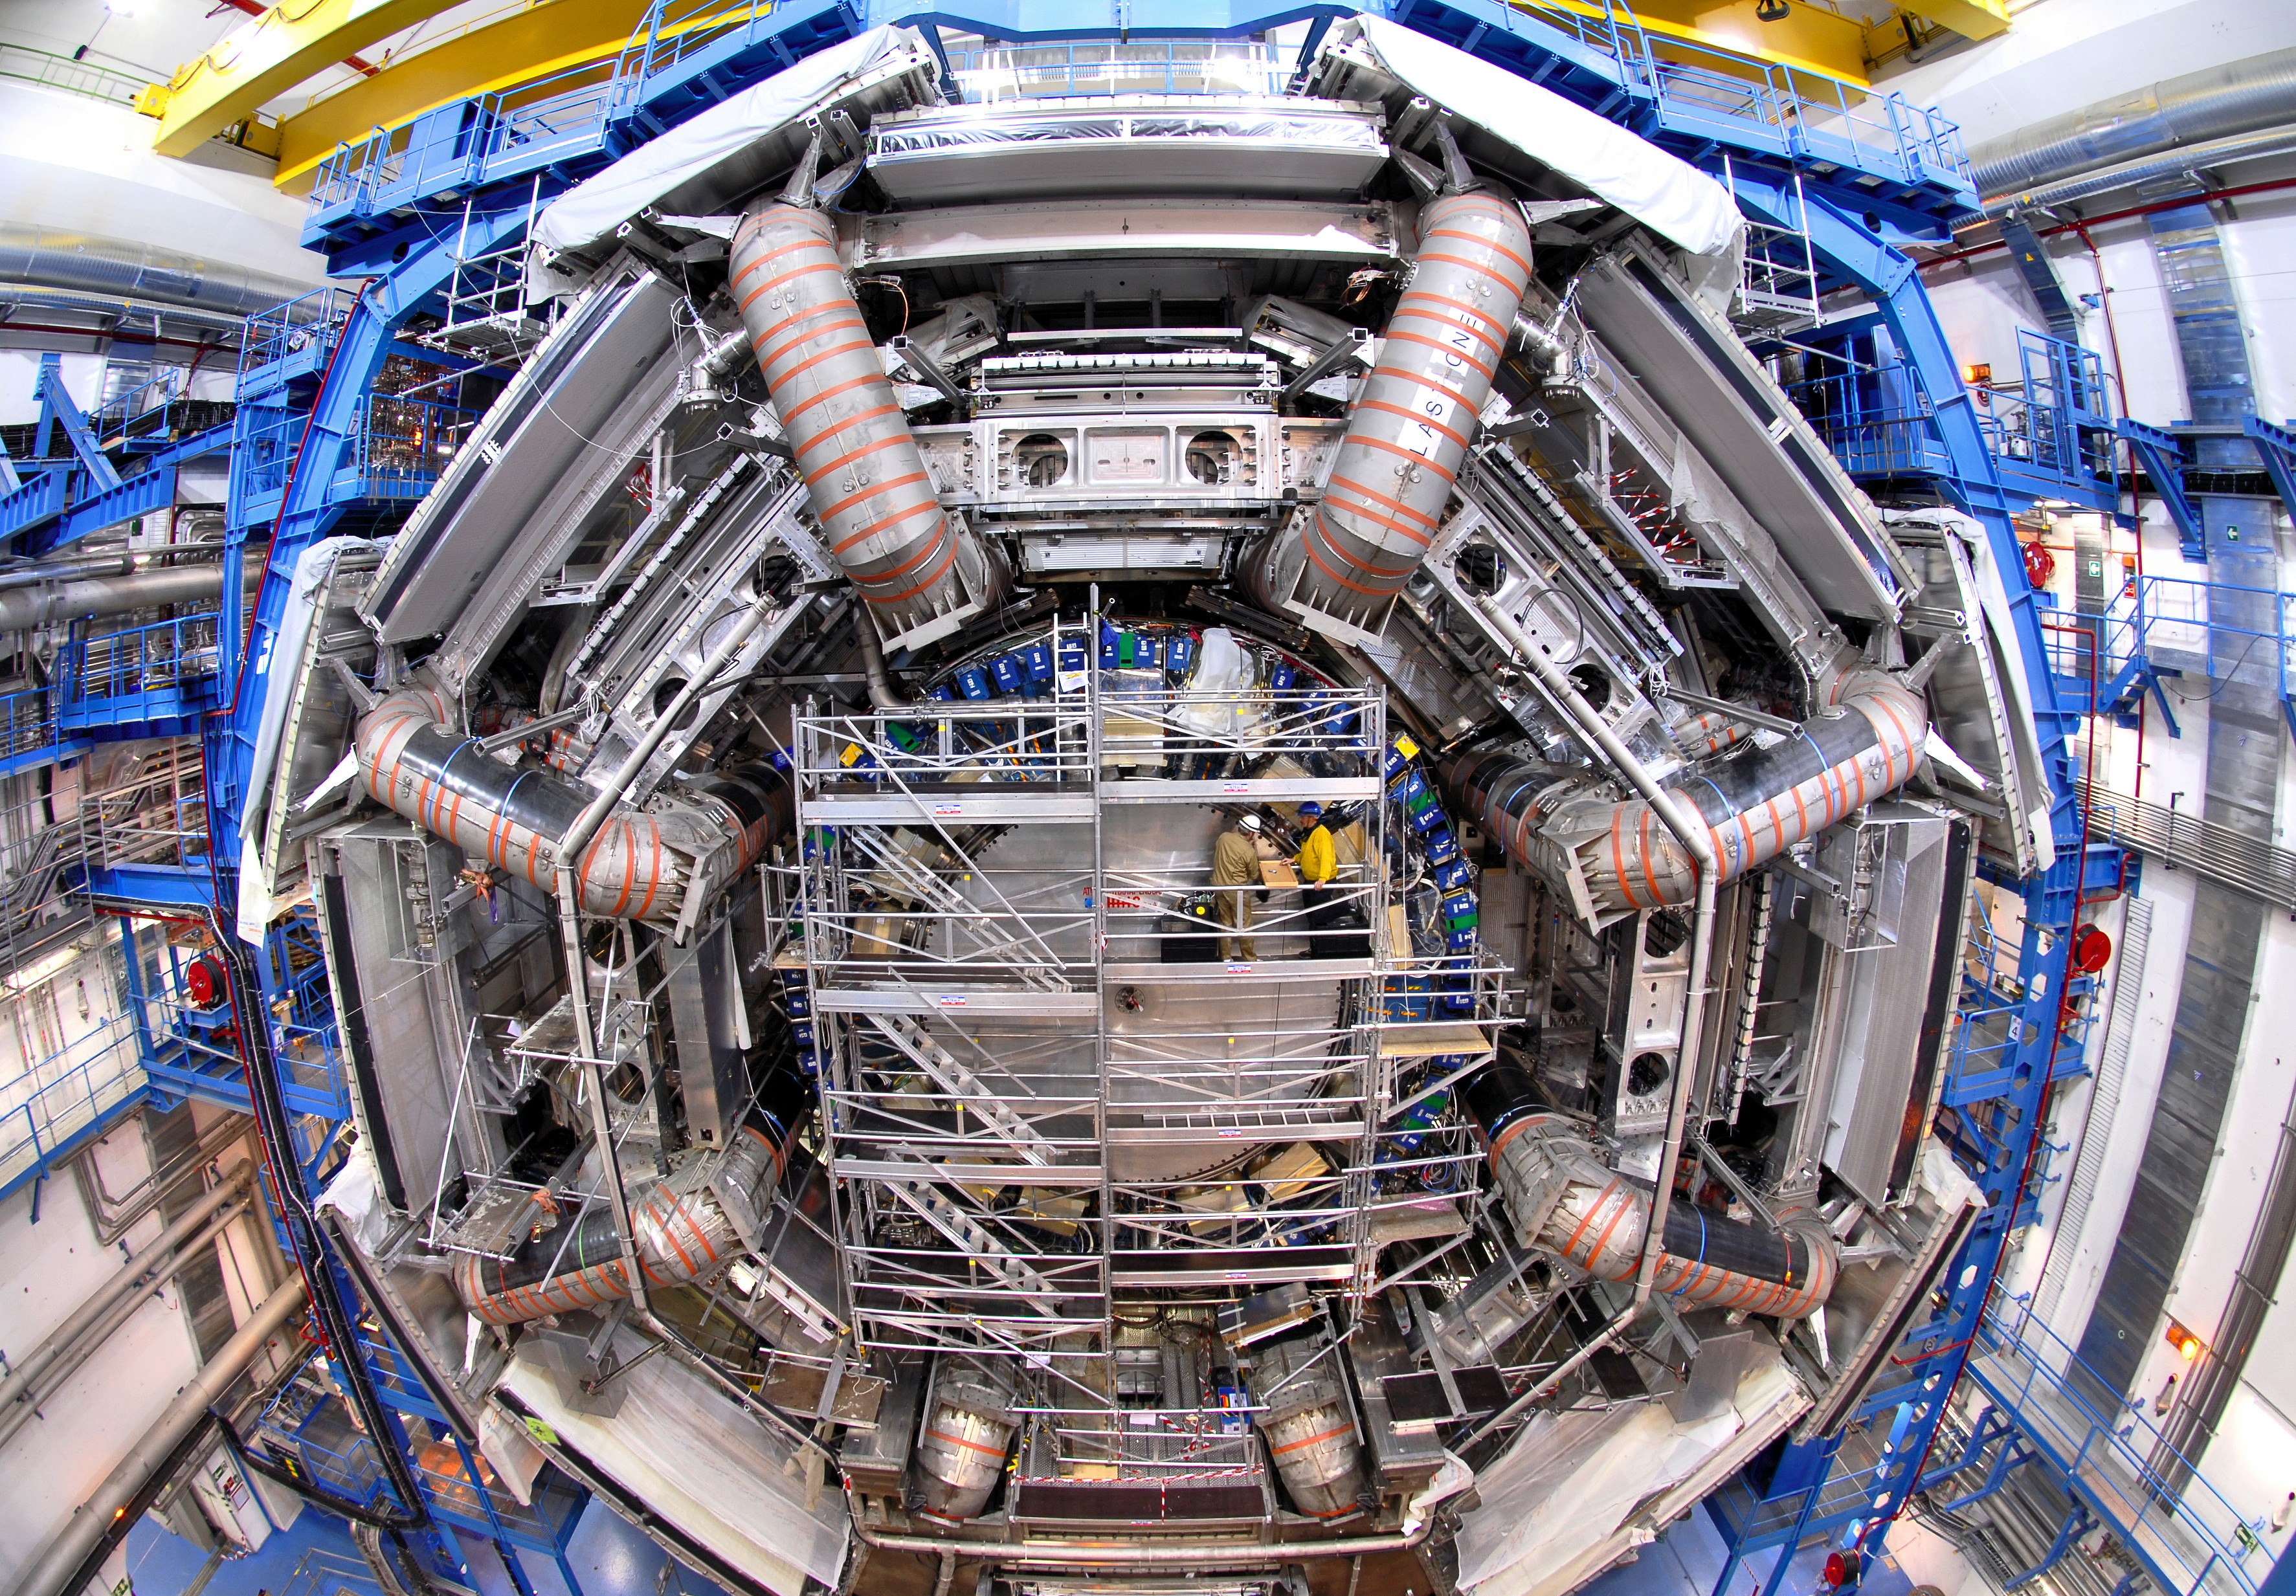 Самая большая частица. ЦЕРН коллайдер. Большой адронный коллайдер Atlas. Адронный коллайдер ЦЕРН. Большой адронный коллайдер атлас.